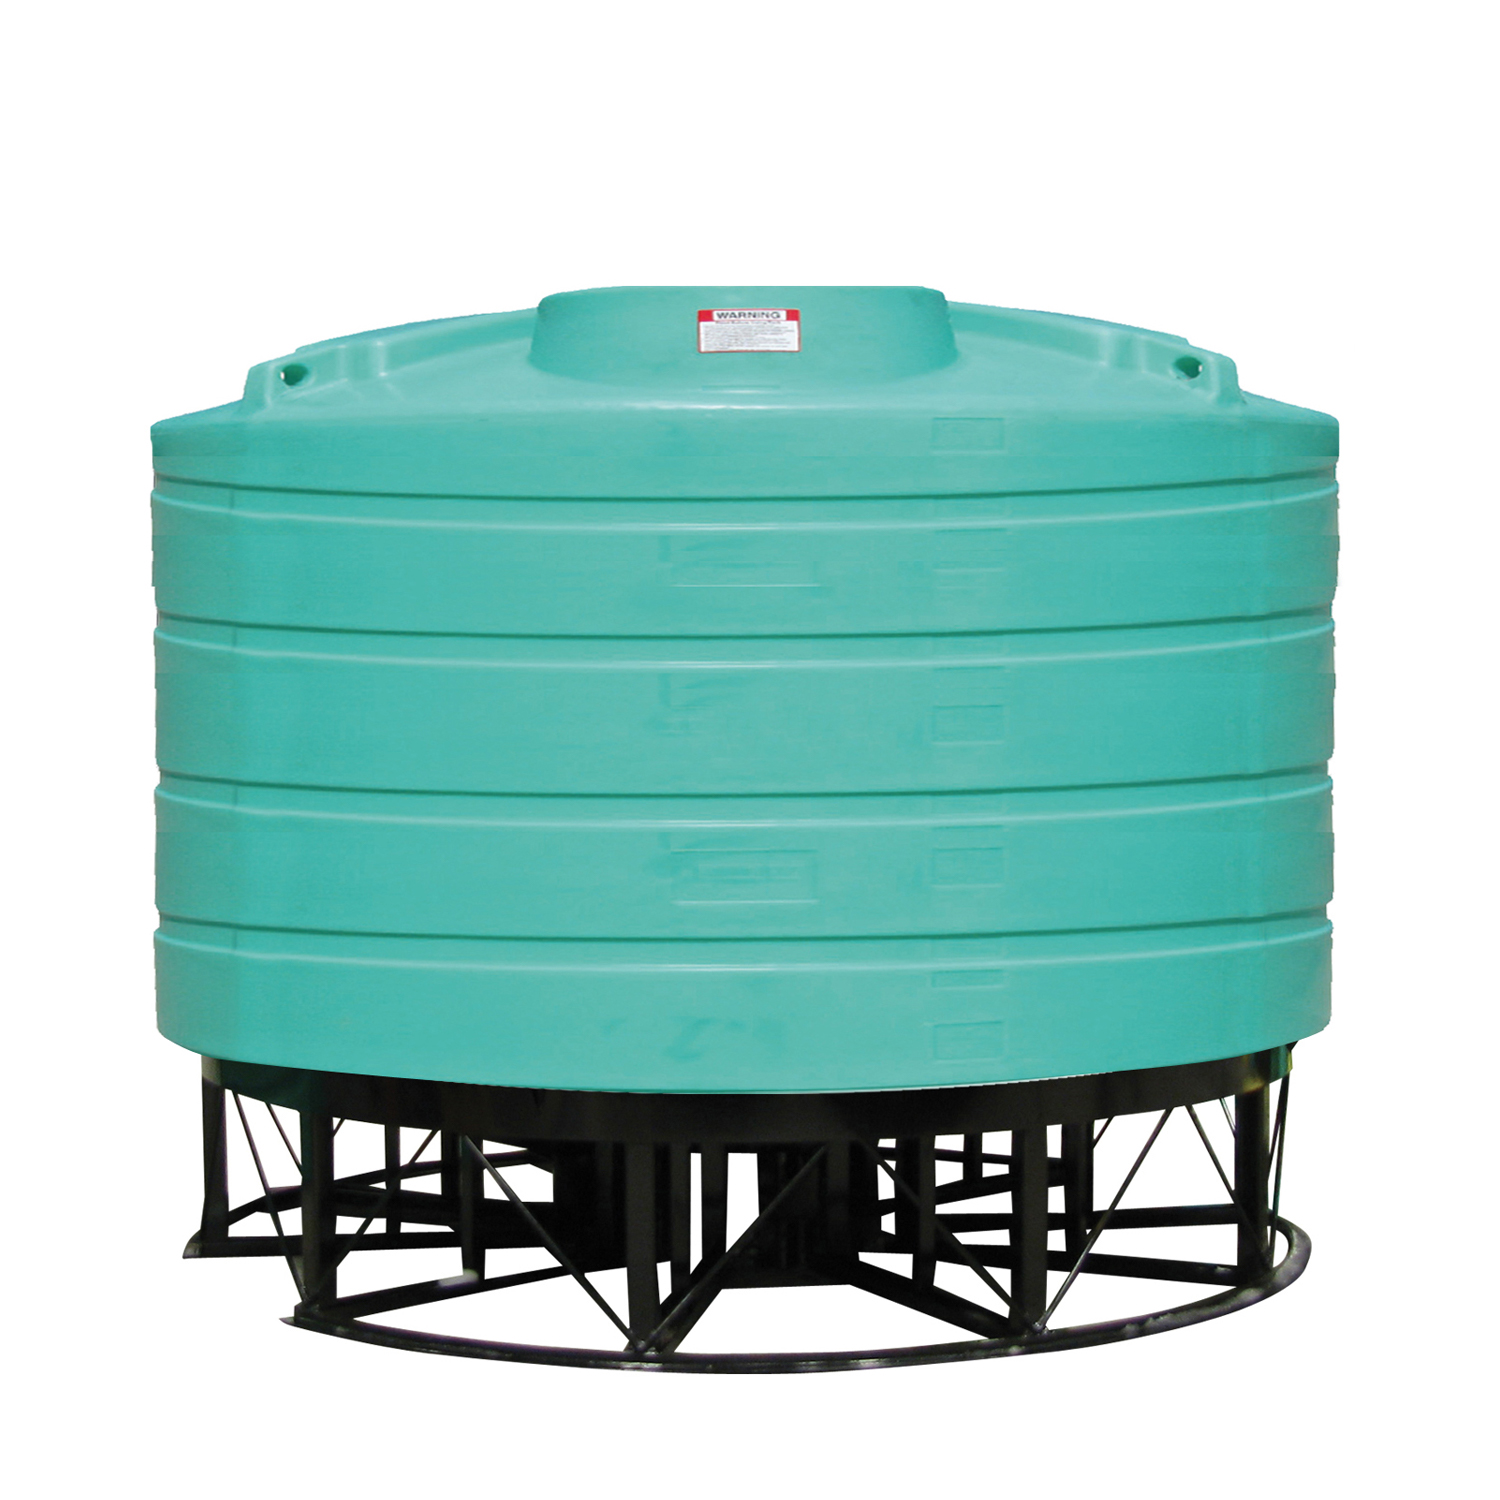 Enduraplas 2,520 Gallon Cone Bottom Storage Tank